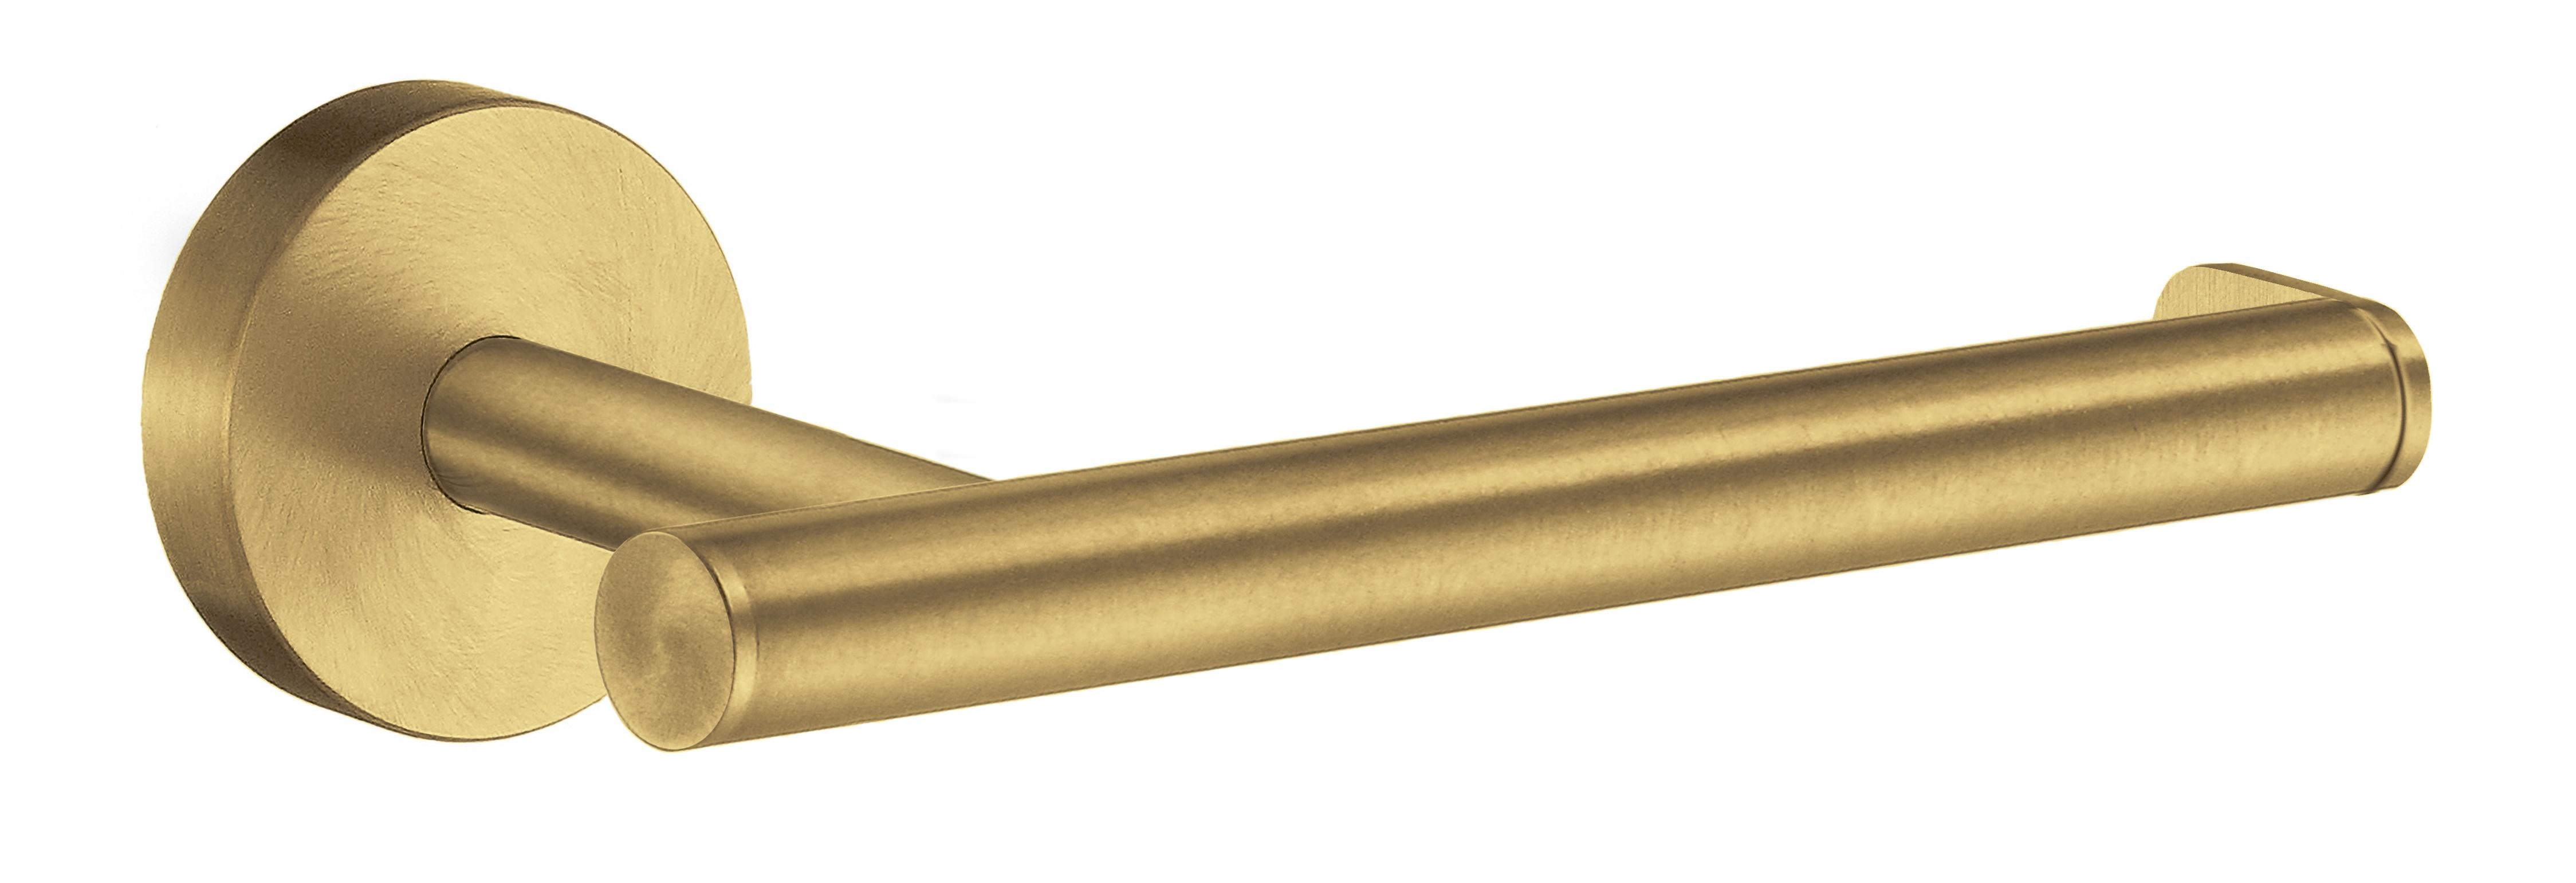 brushed brass toilet roll holder